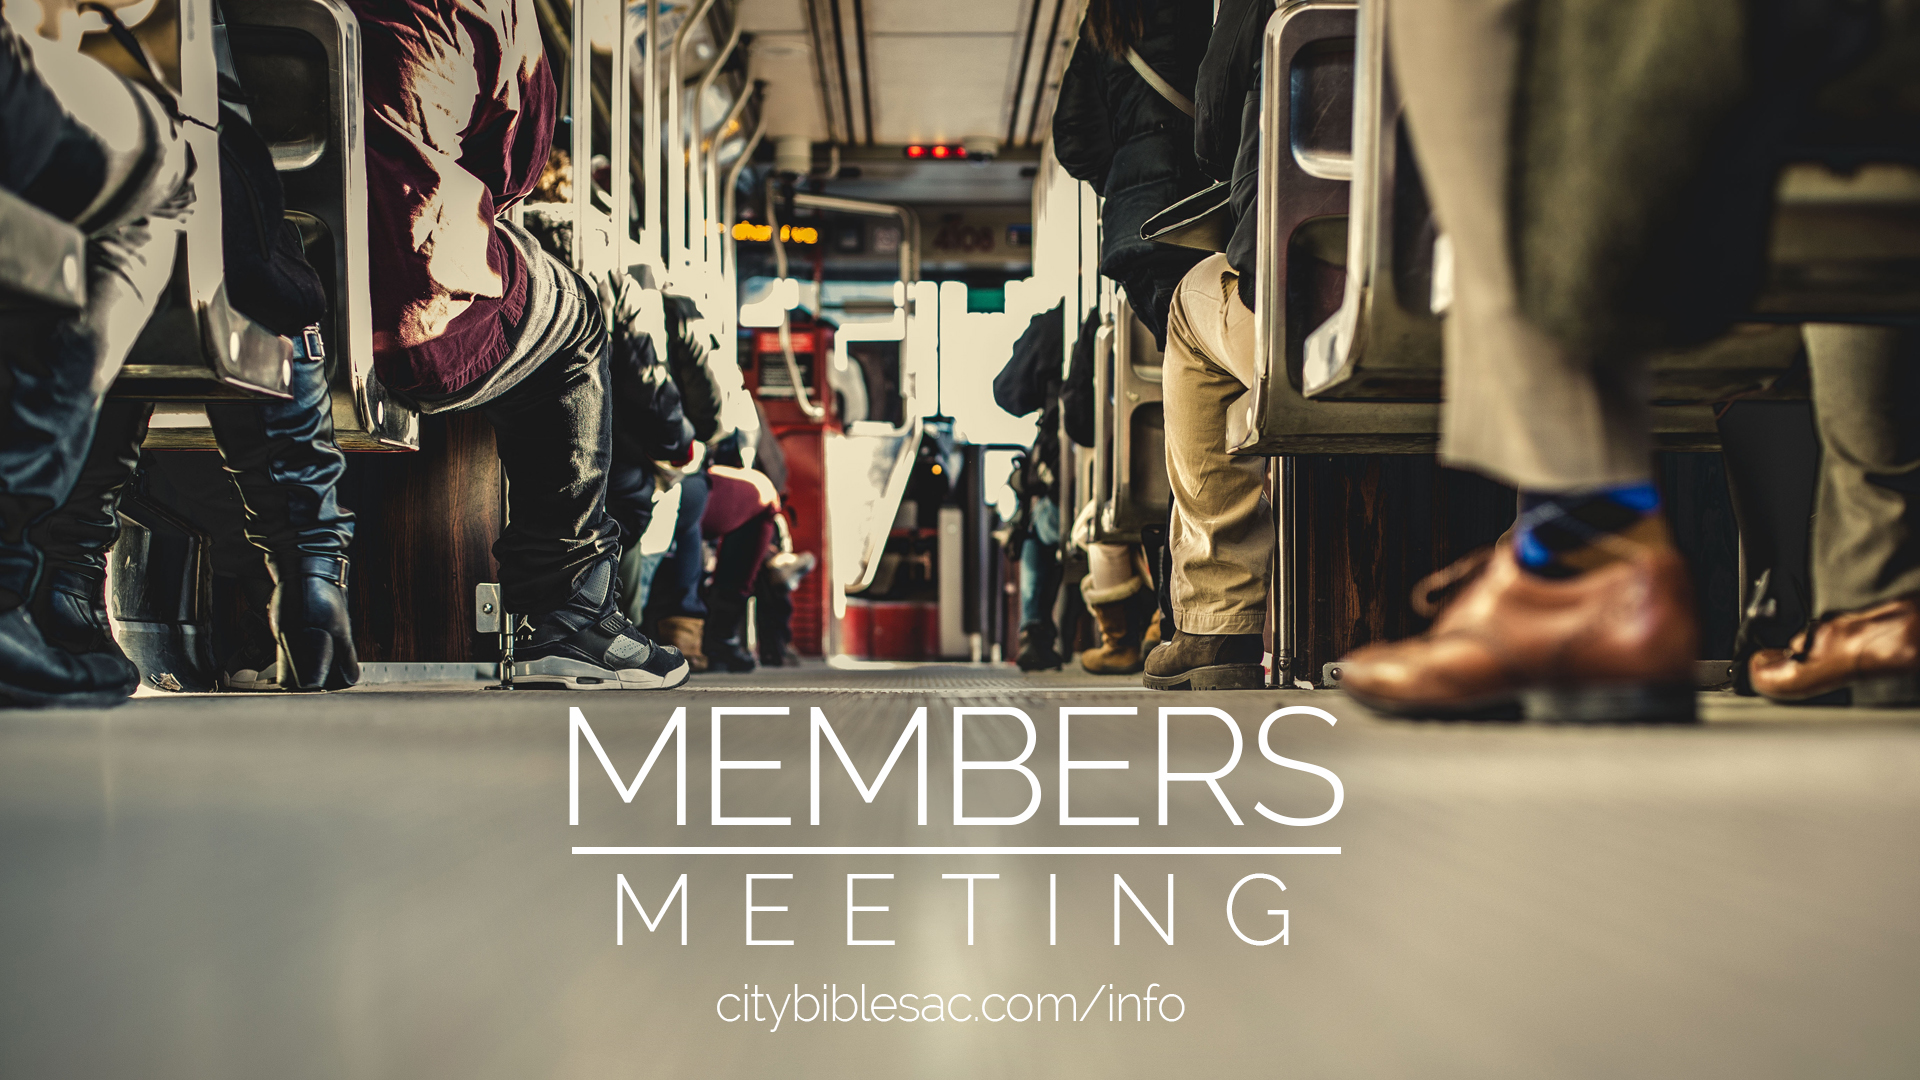 Members Meeting image